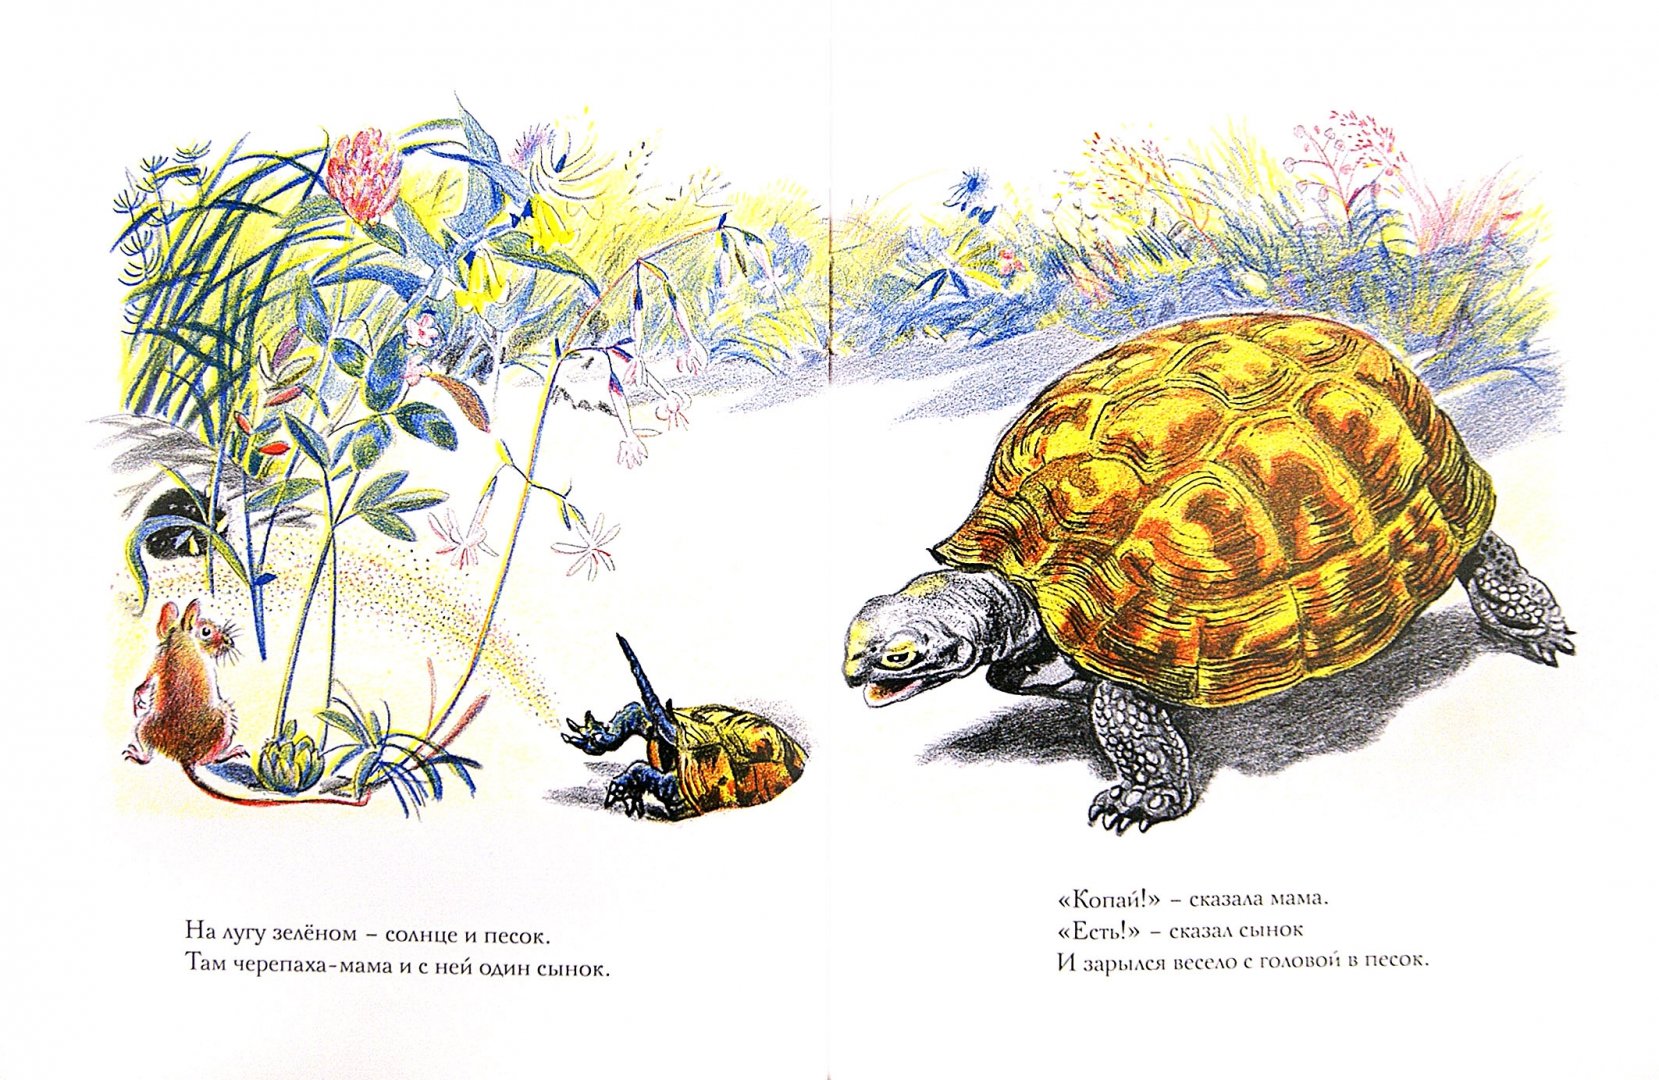 Читай про черепаху. Л Н толстой черепаха. Лев Николаевич толстой черепаха. Рассказ черепаха толстой. Иллюстрация к рассказу черепаха толстой.